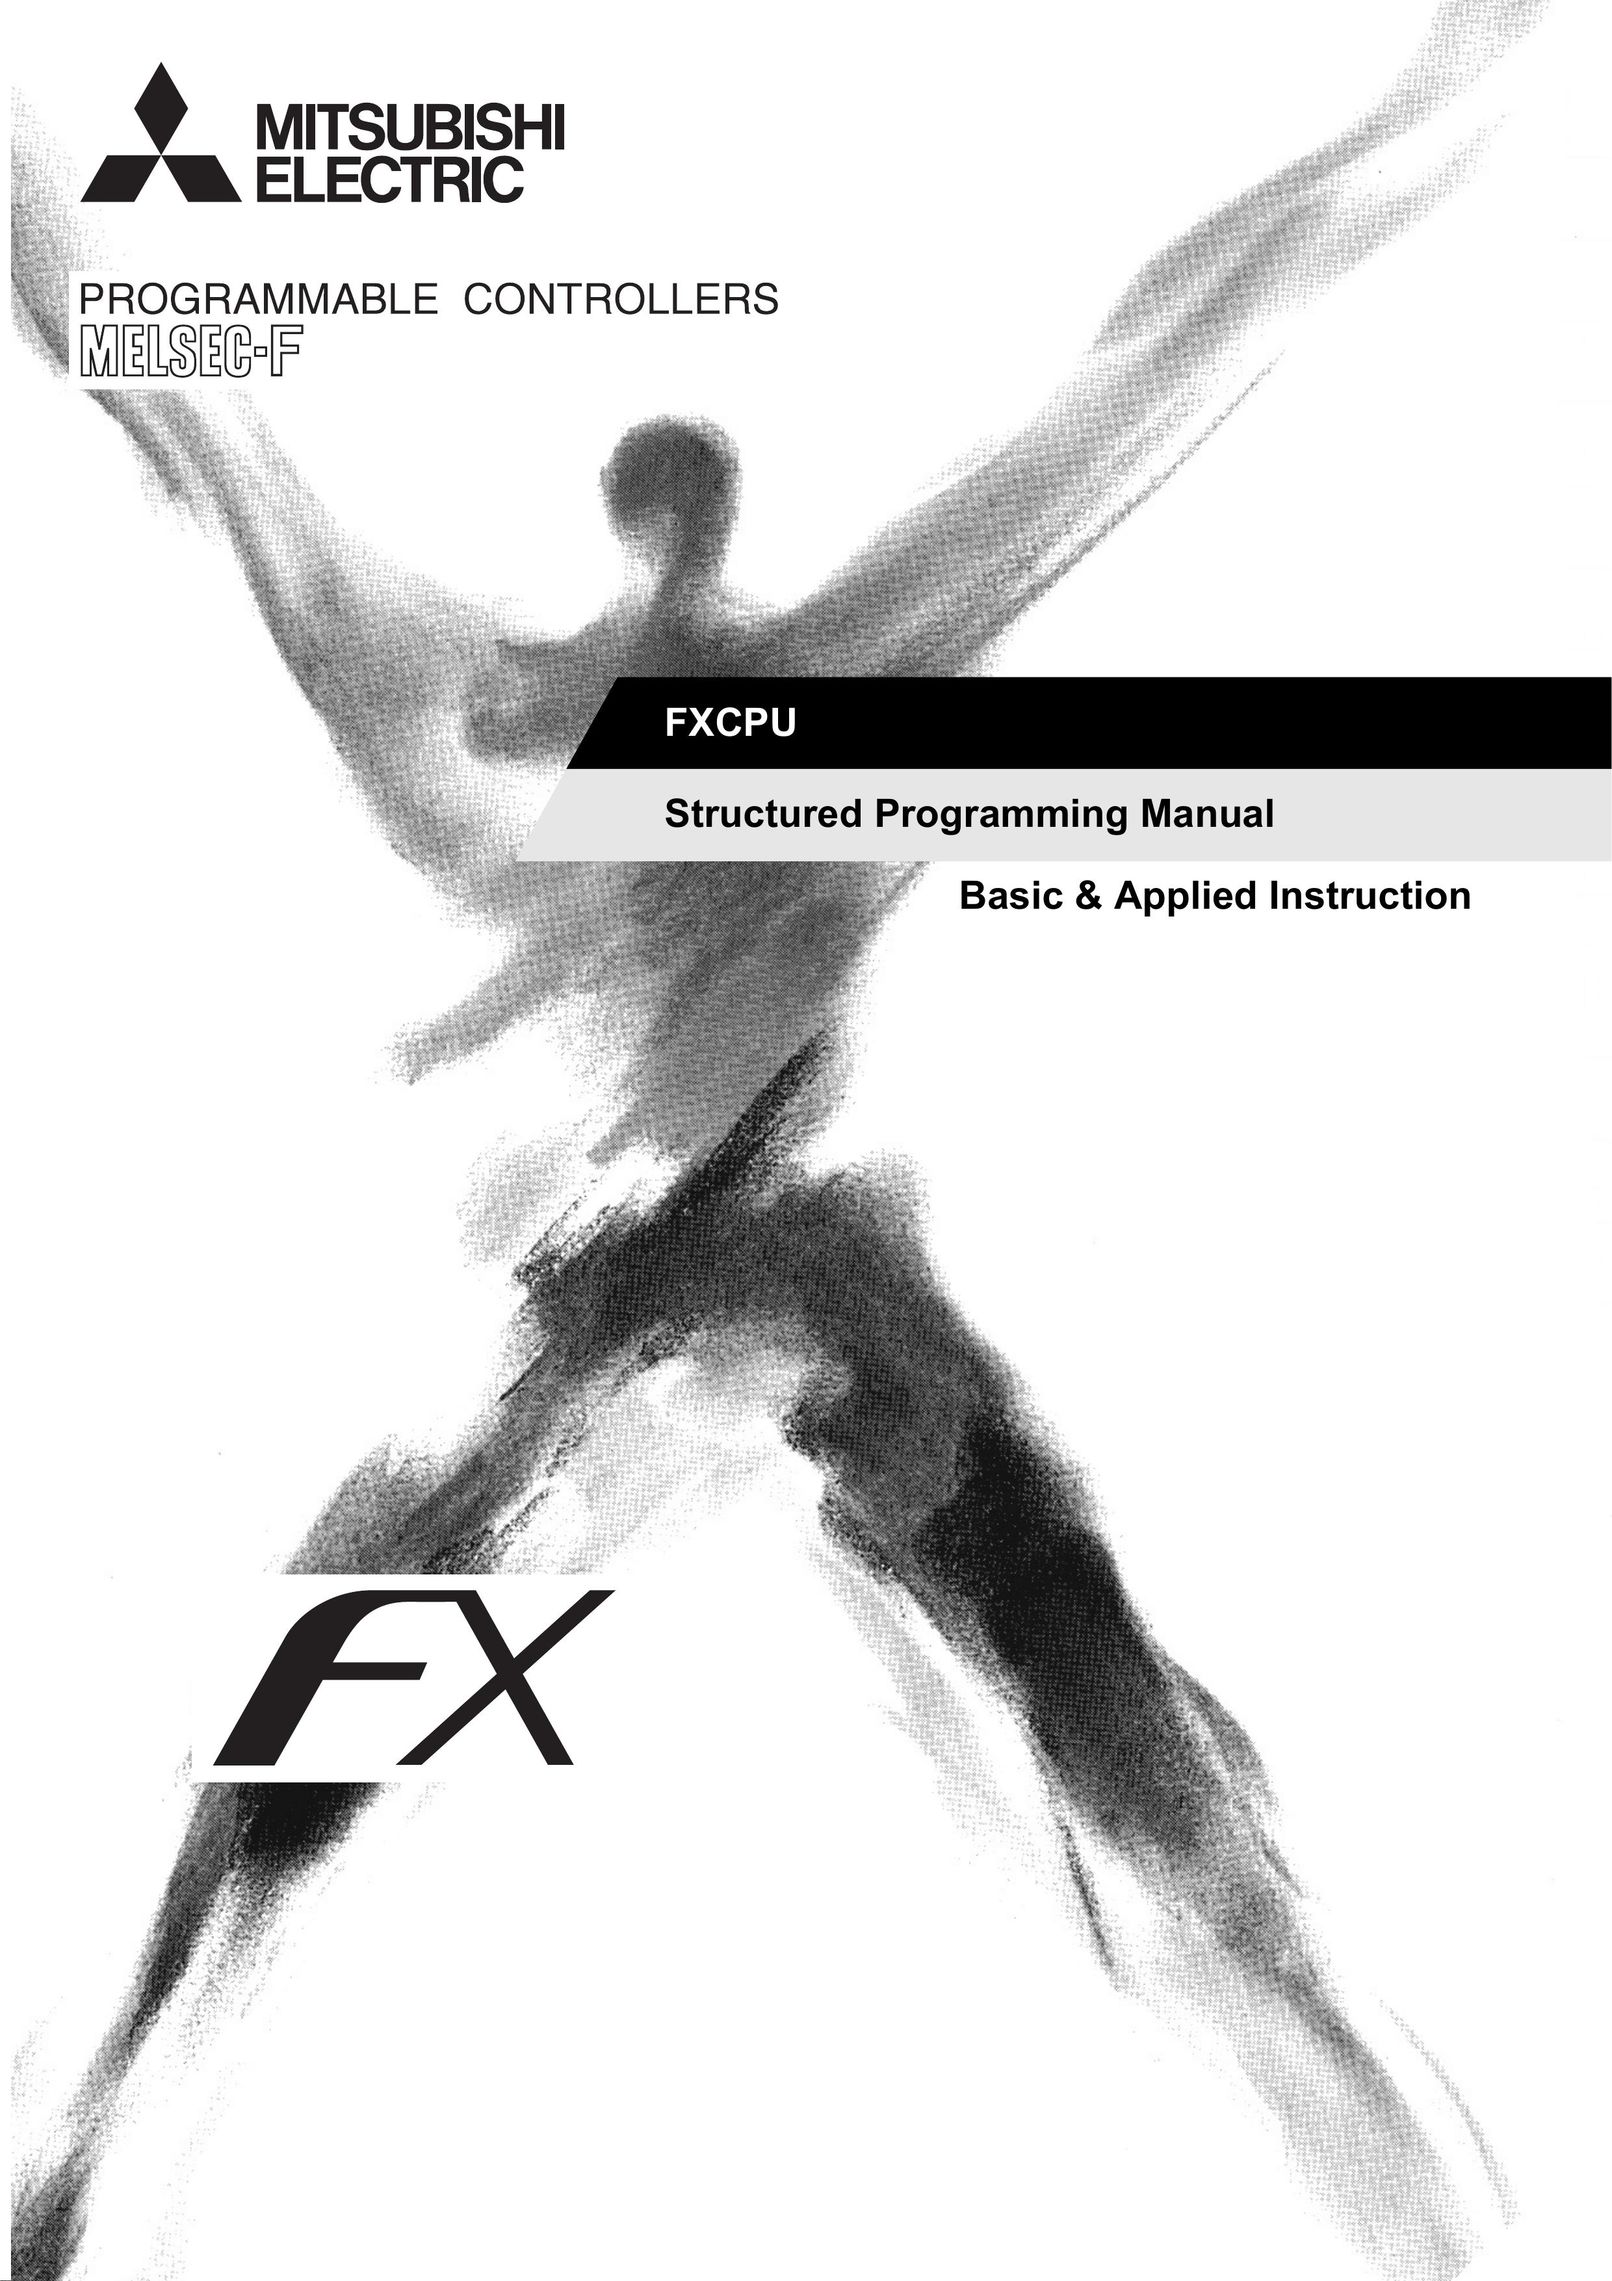 Mitsubishi Electronics FXCPU Video Game Controller User Manual